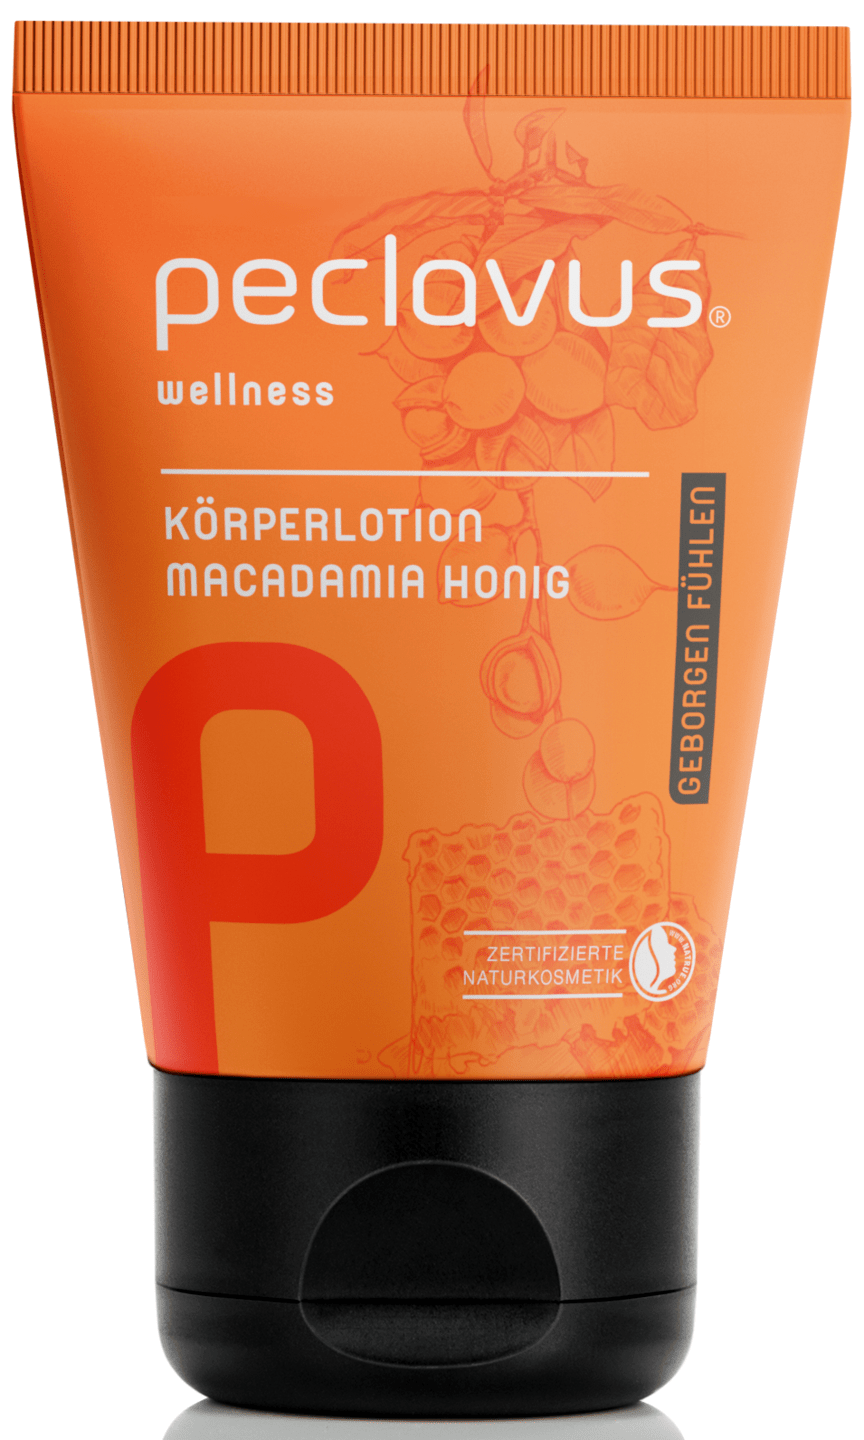 peclavus - Körperlotion Macadamia Honig, 30 ml